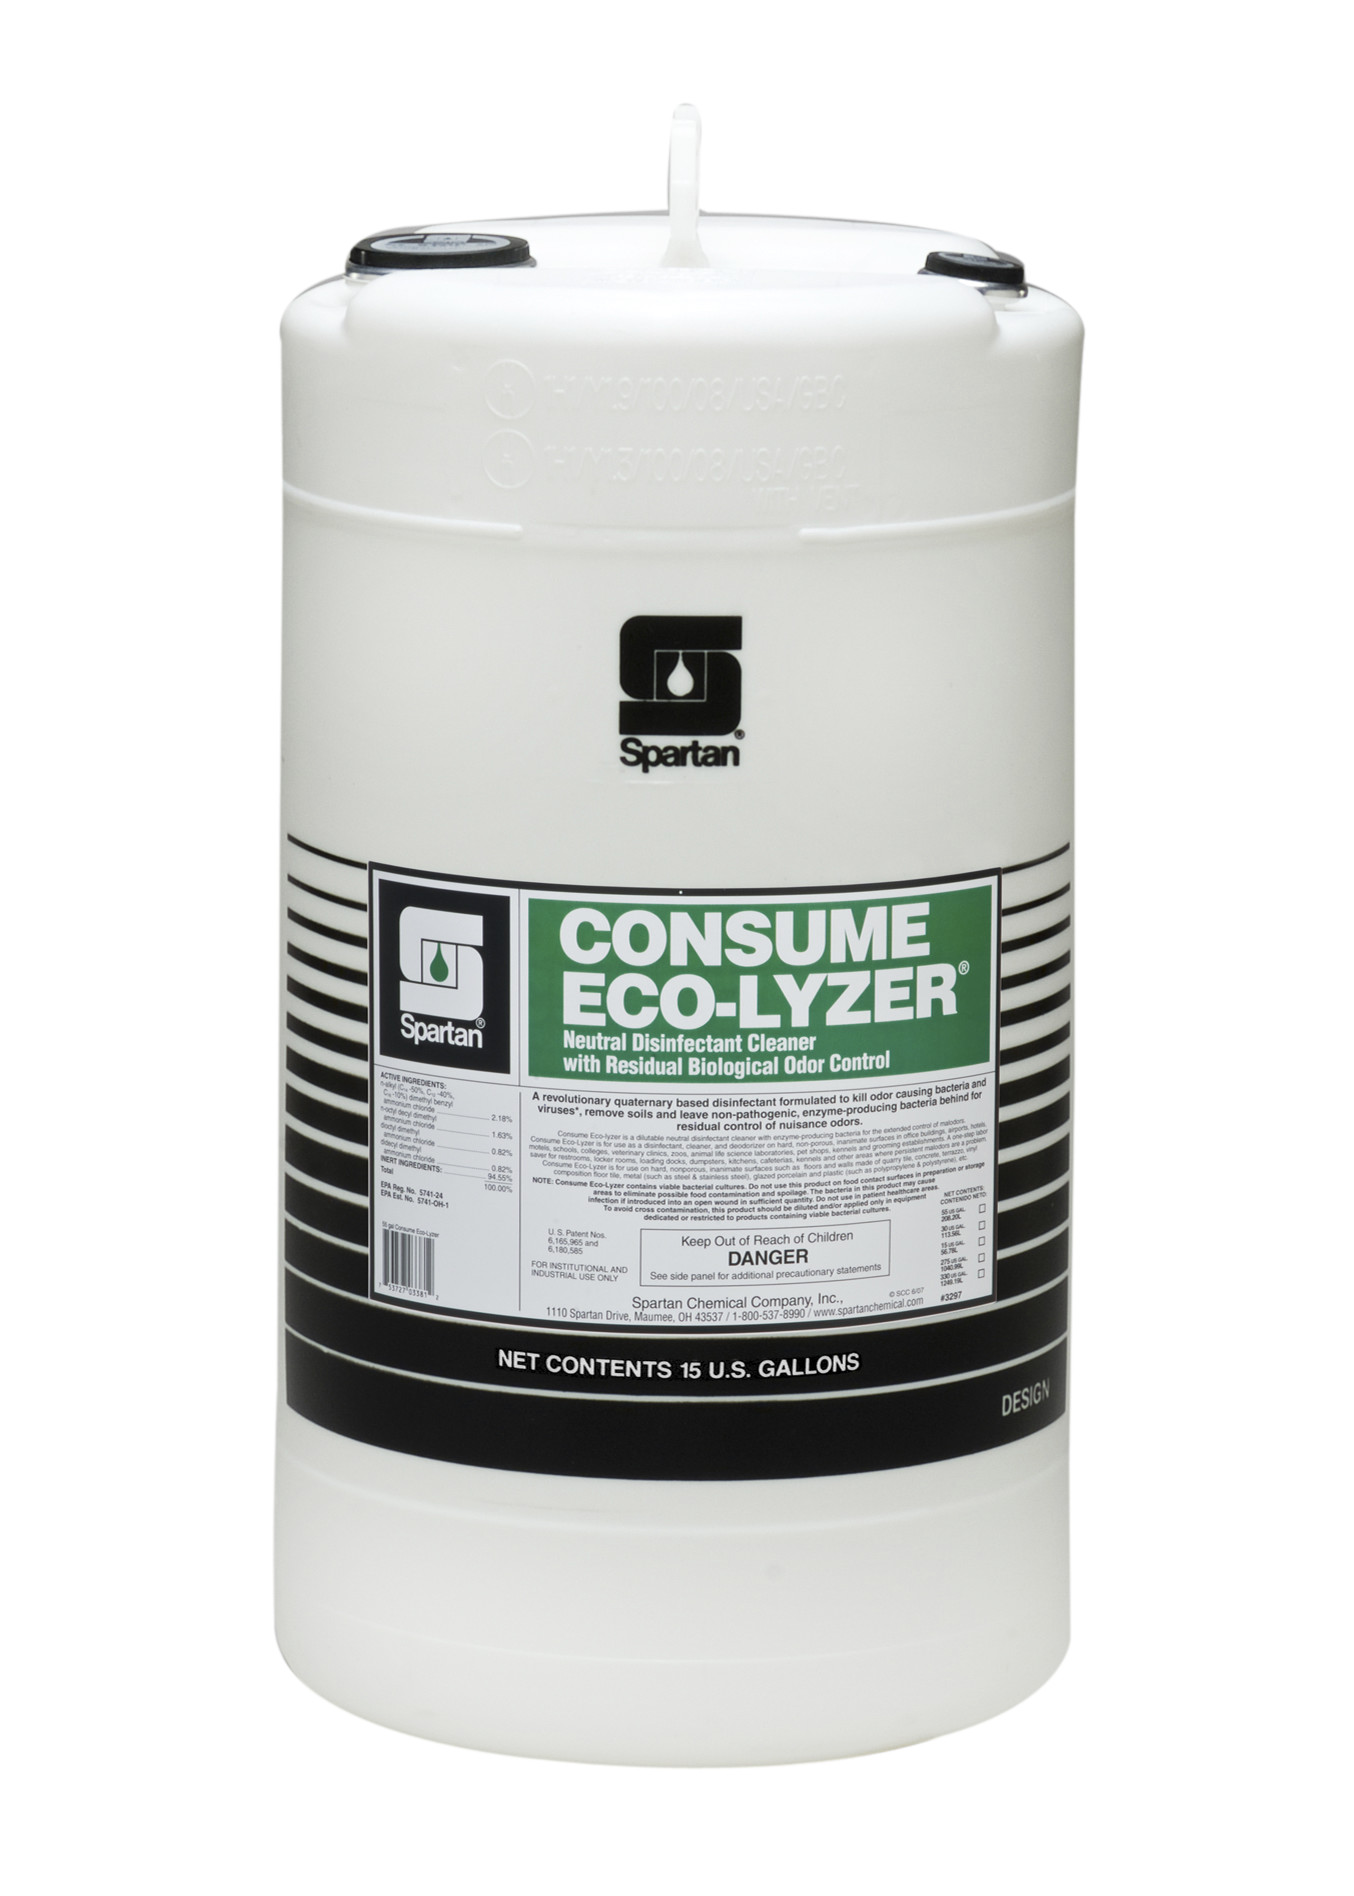 Spartan Chemical Company Consume Eco-Lyzer, 15 GAL DRUM